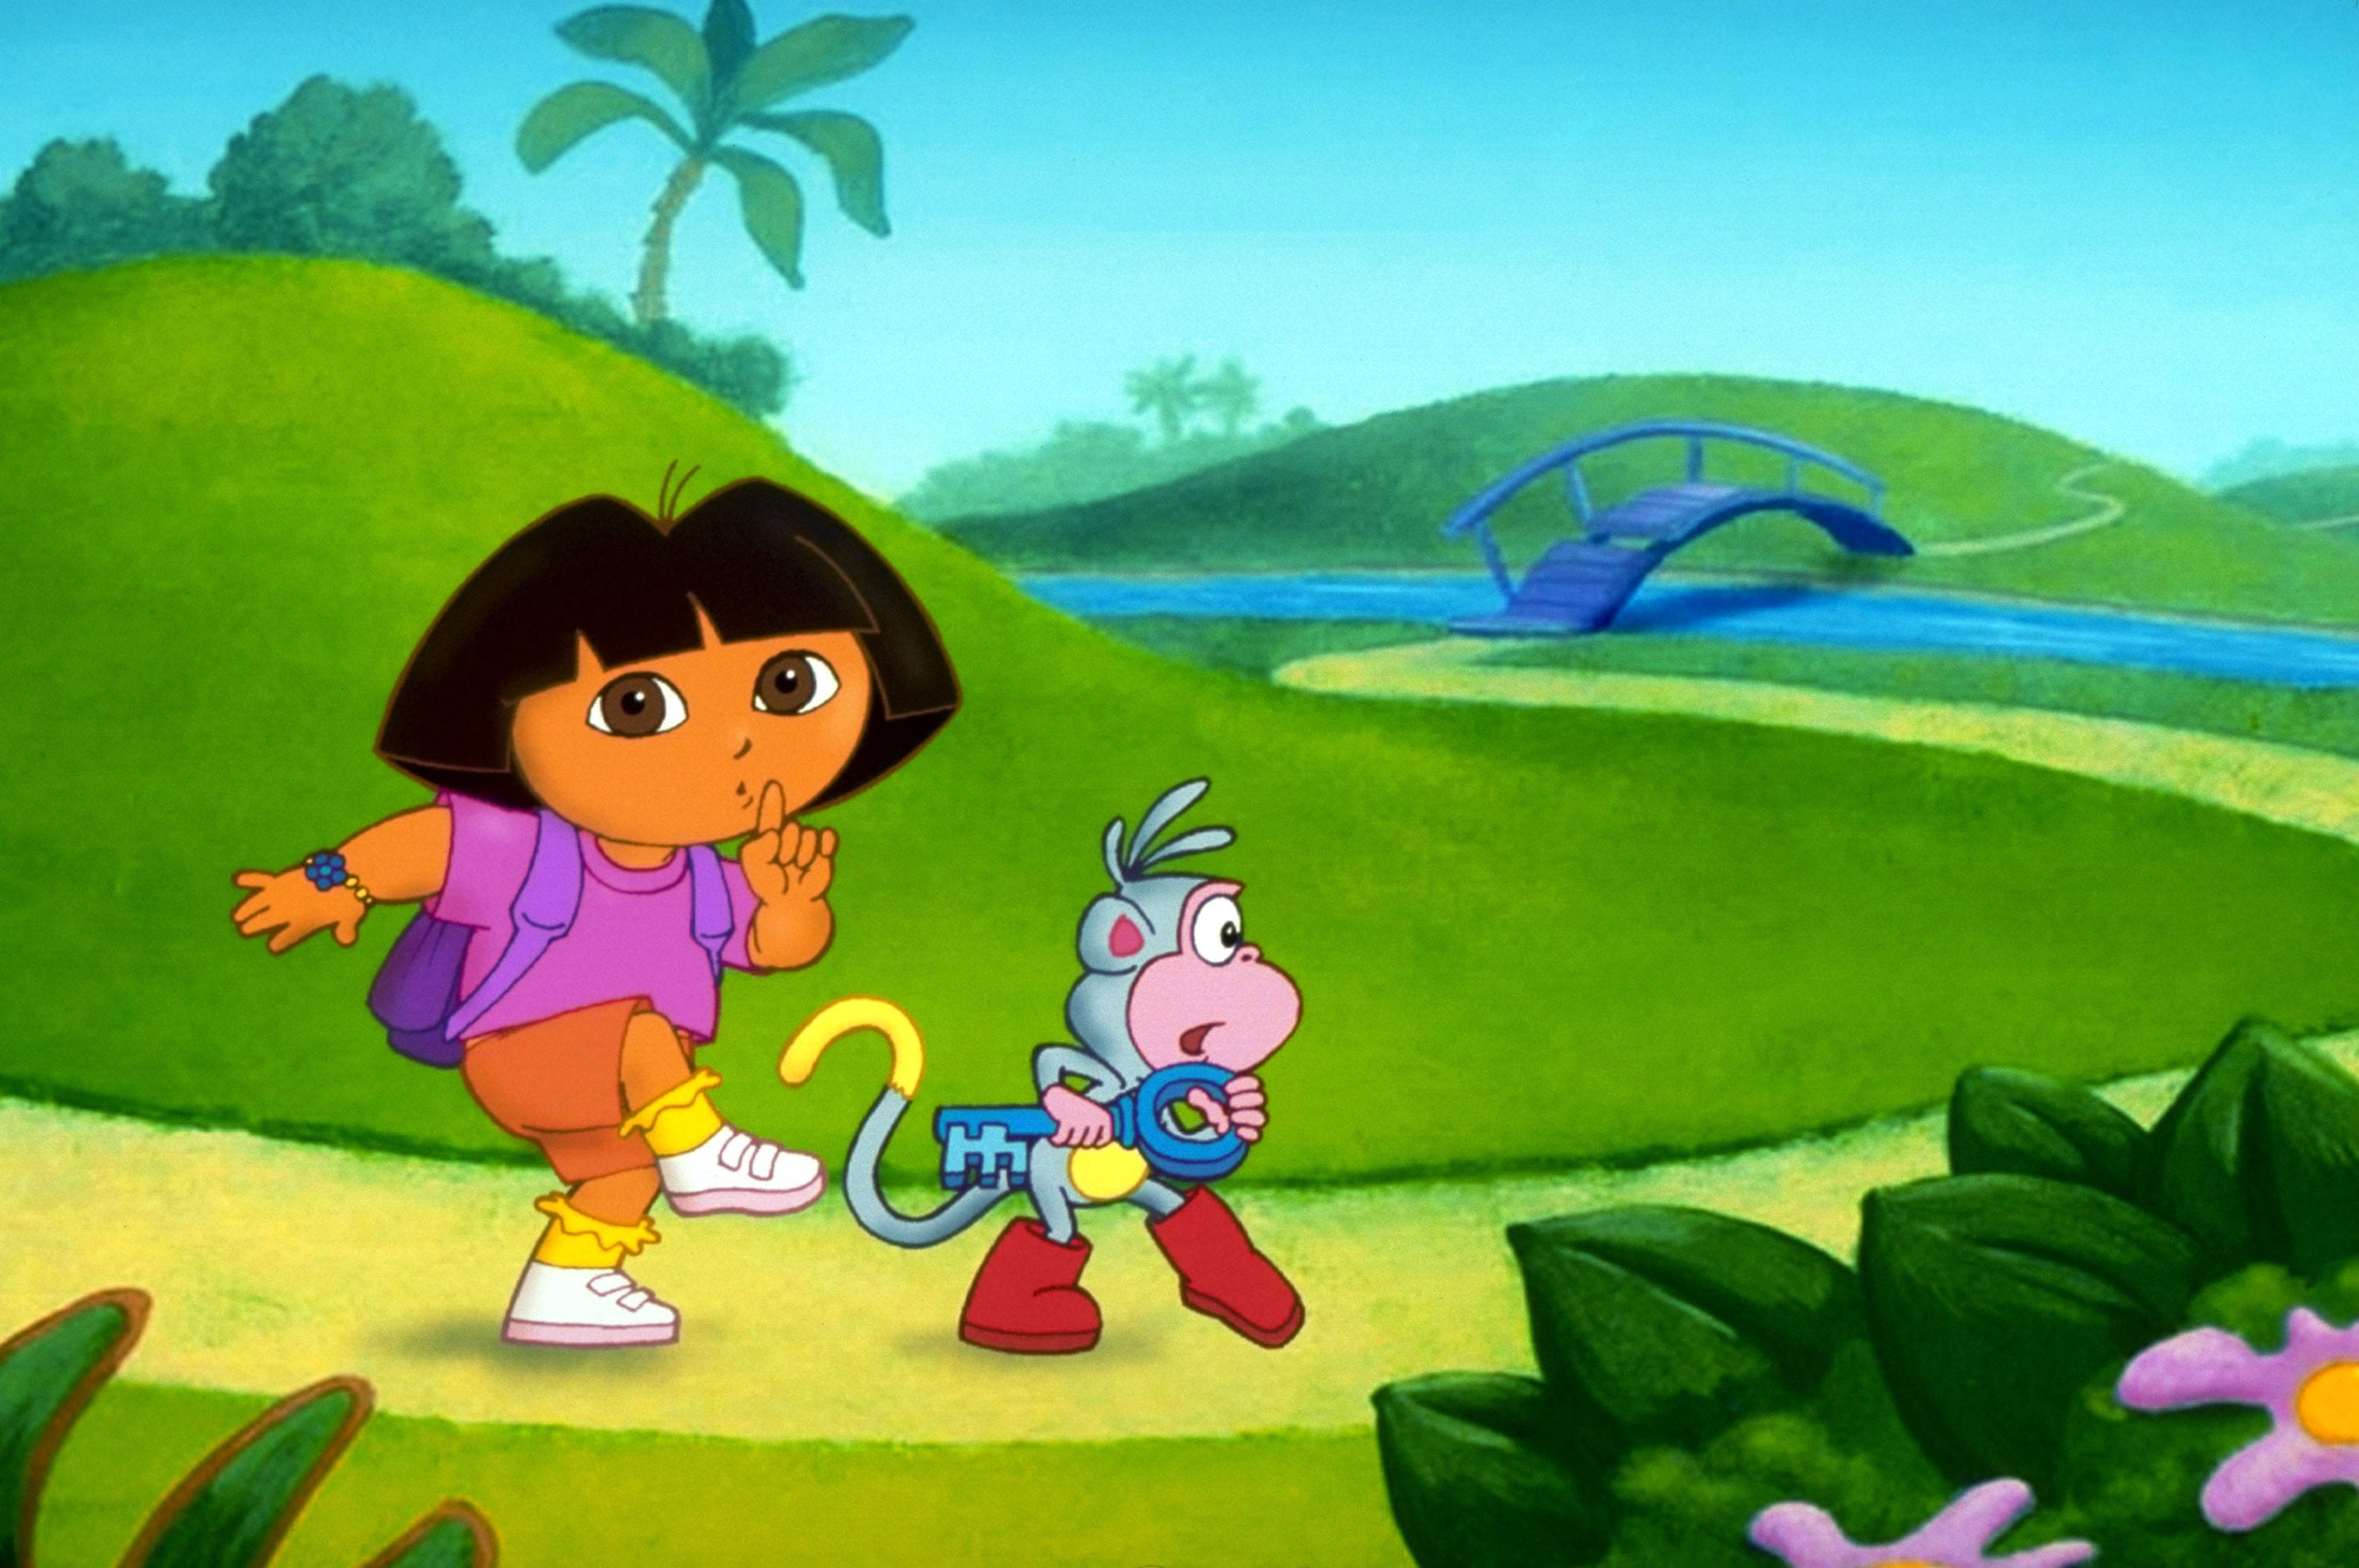 Dora the Explorer Live-Action Movie Details